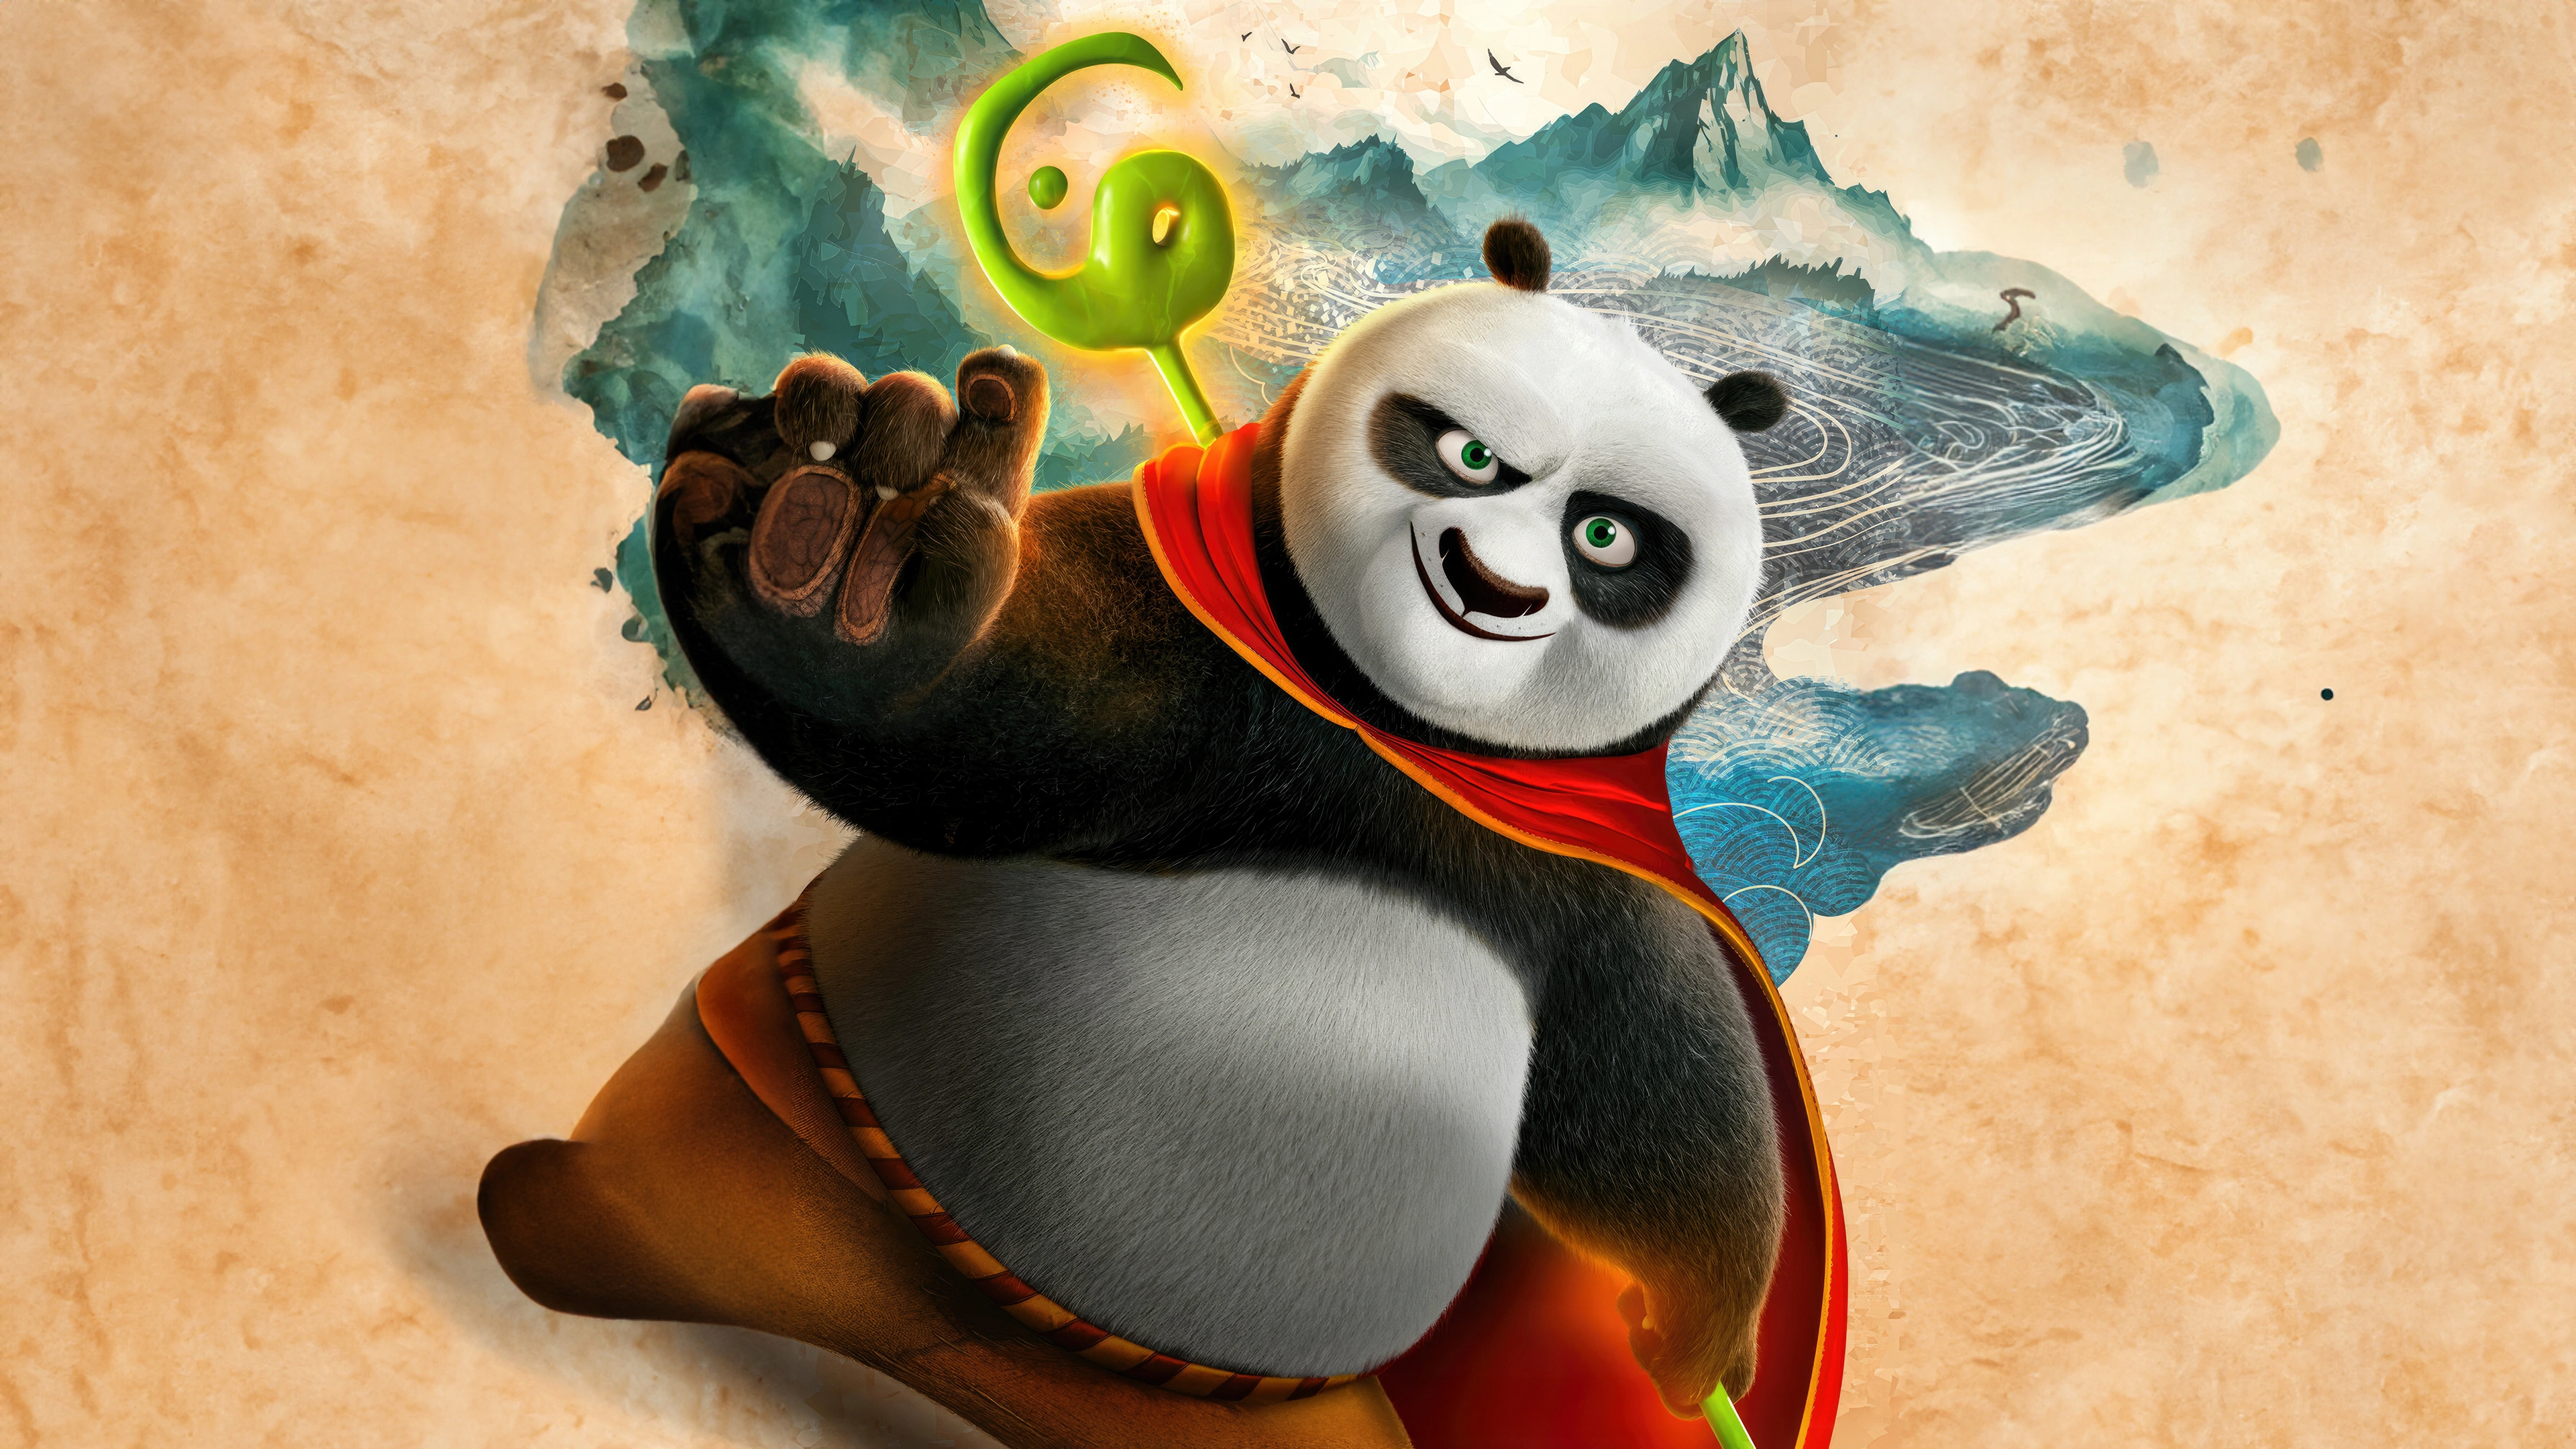 kung fu panda 4 poster up.jpg